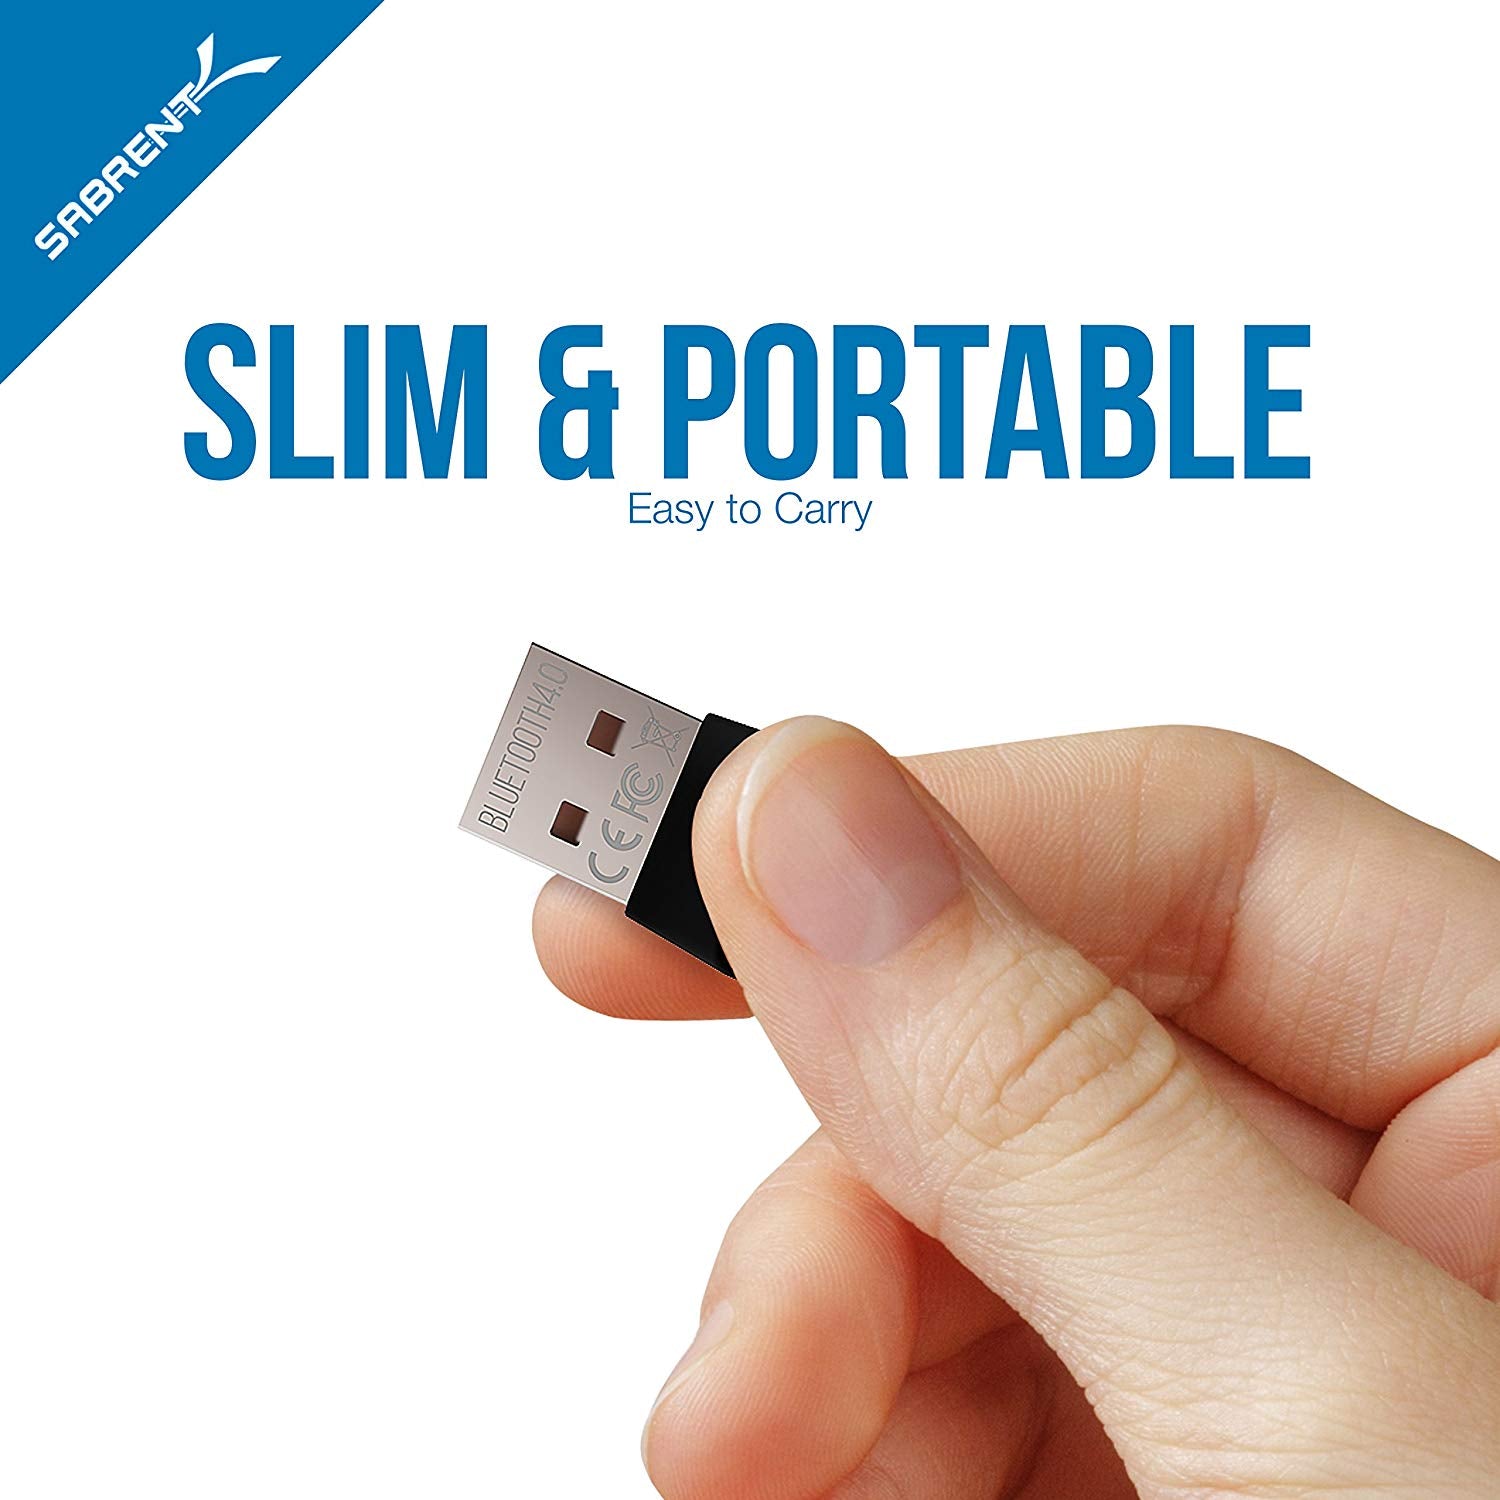 Dongle USB Bluetooth, 4.0, Bluetooth / USB, Incluants: Logiciel